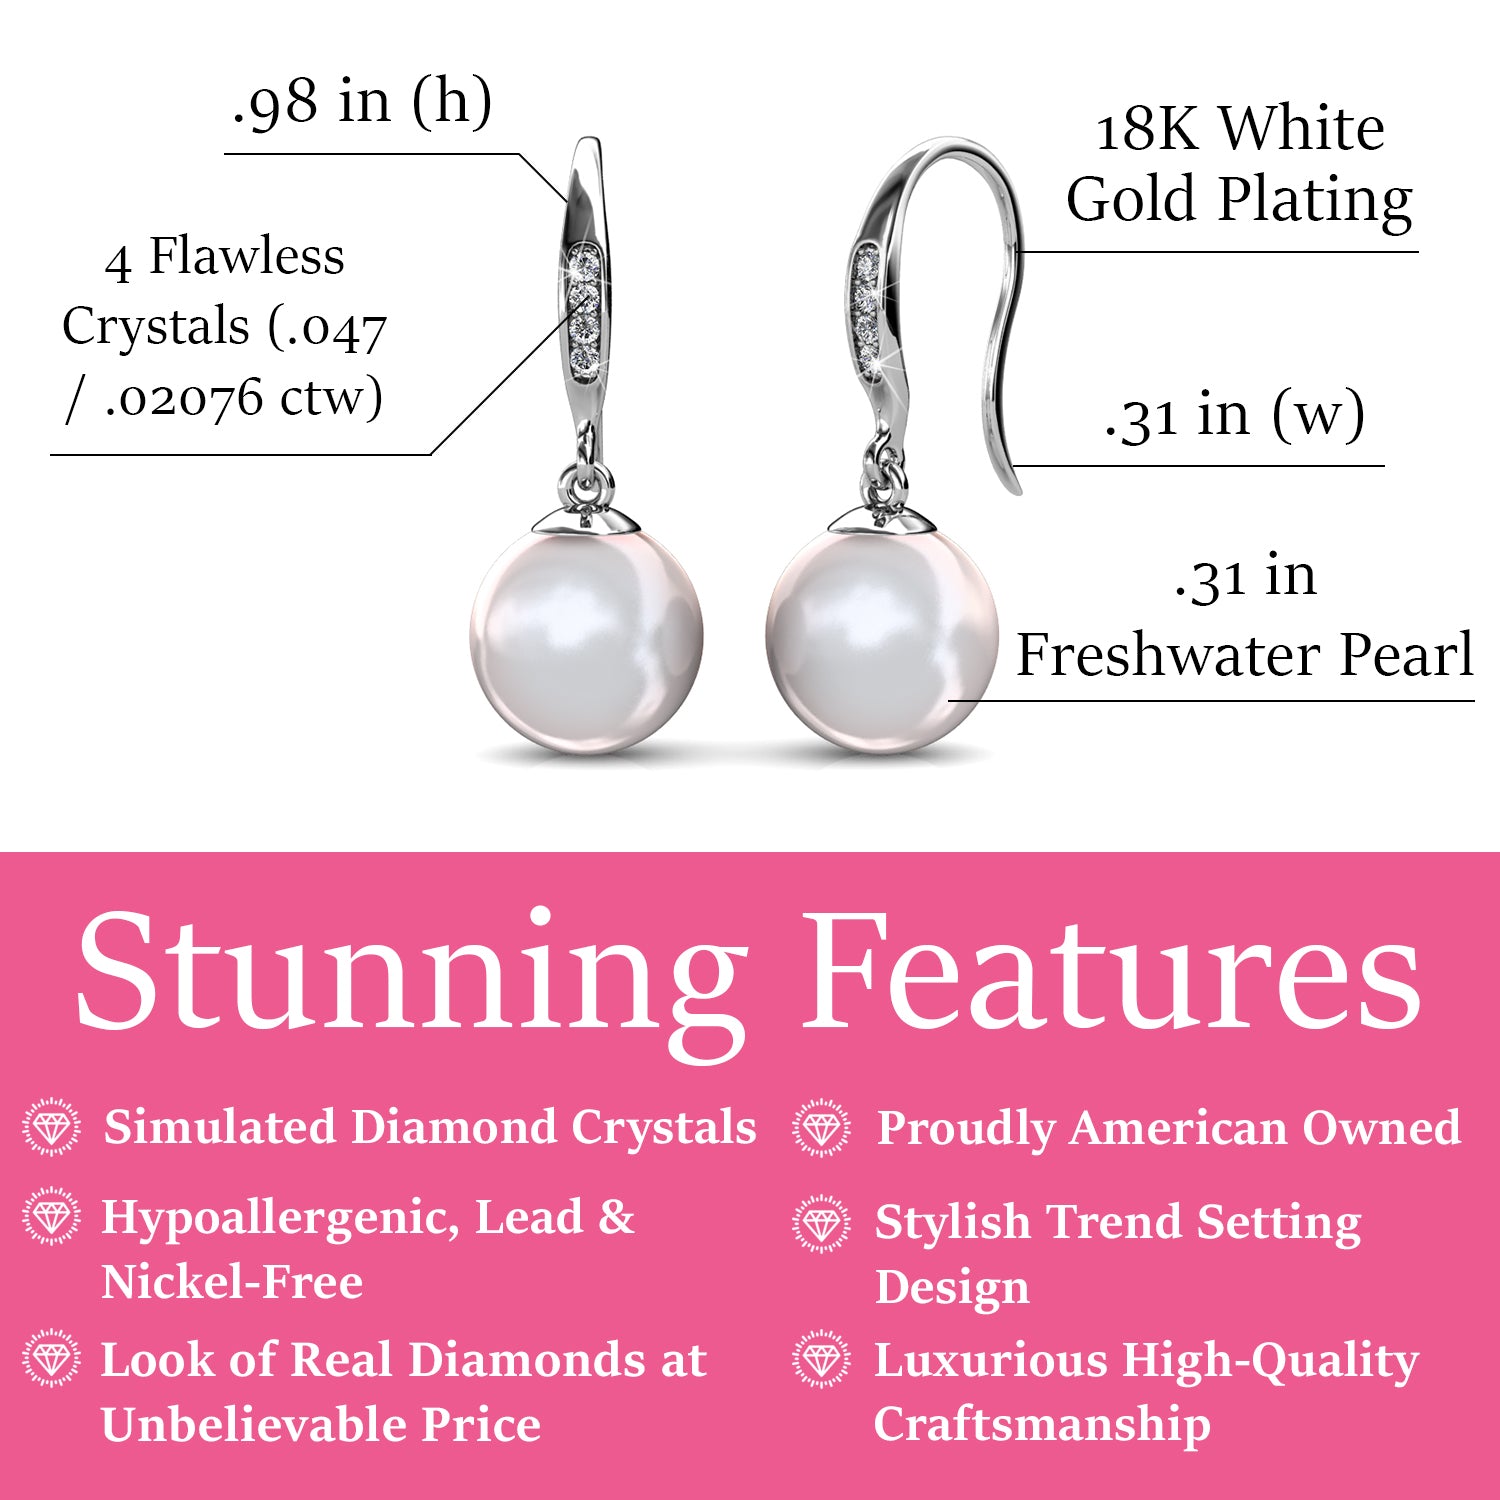 Wholesale 11x20mm Yellow Gold Filled Hook Dangle Earring Hook jewelry  findings earrings [NF0244] - $1.99 : Pearls at Pearls, Wholesale Pearls and  Pearl Jewelry Supplies!